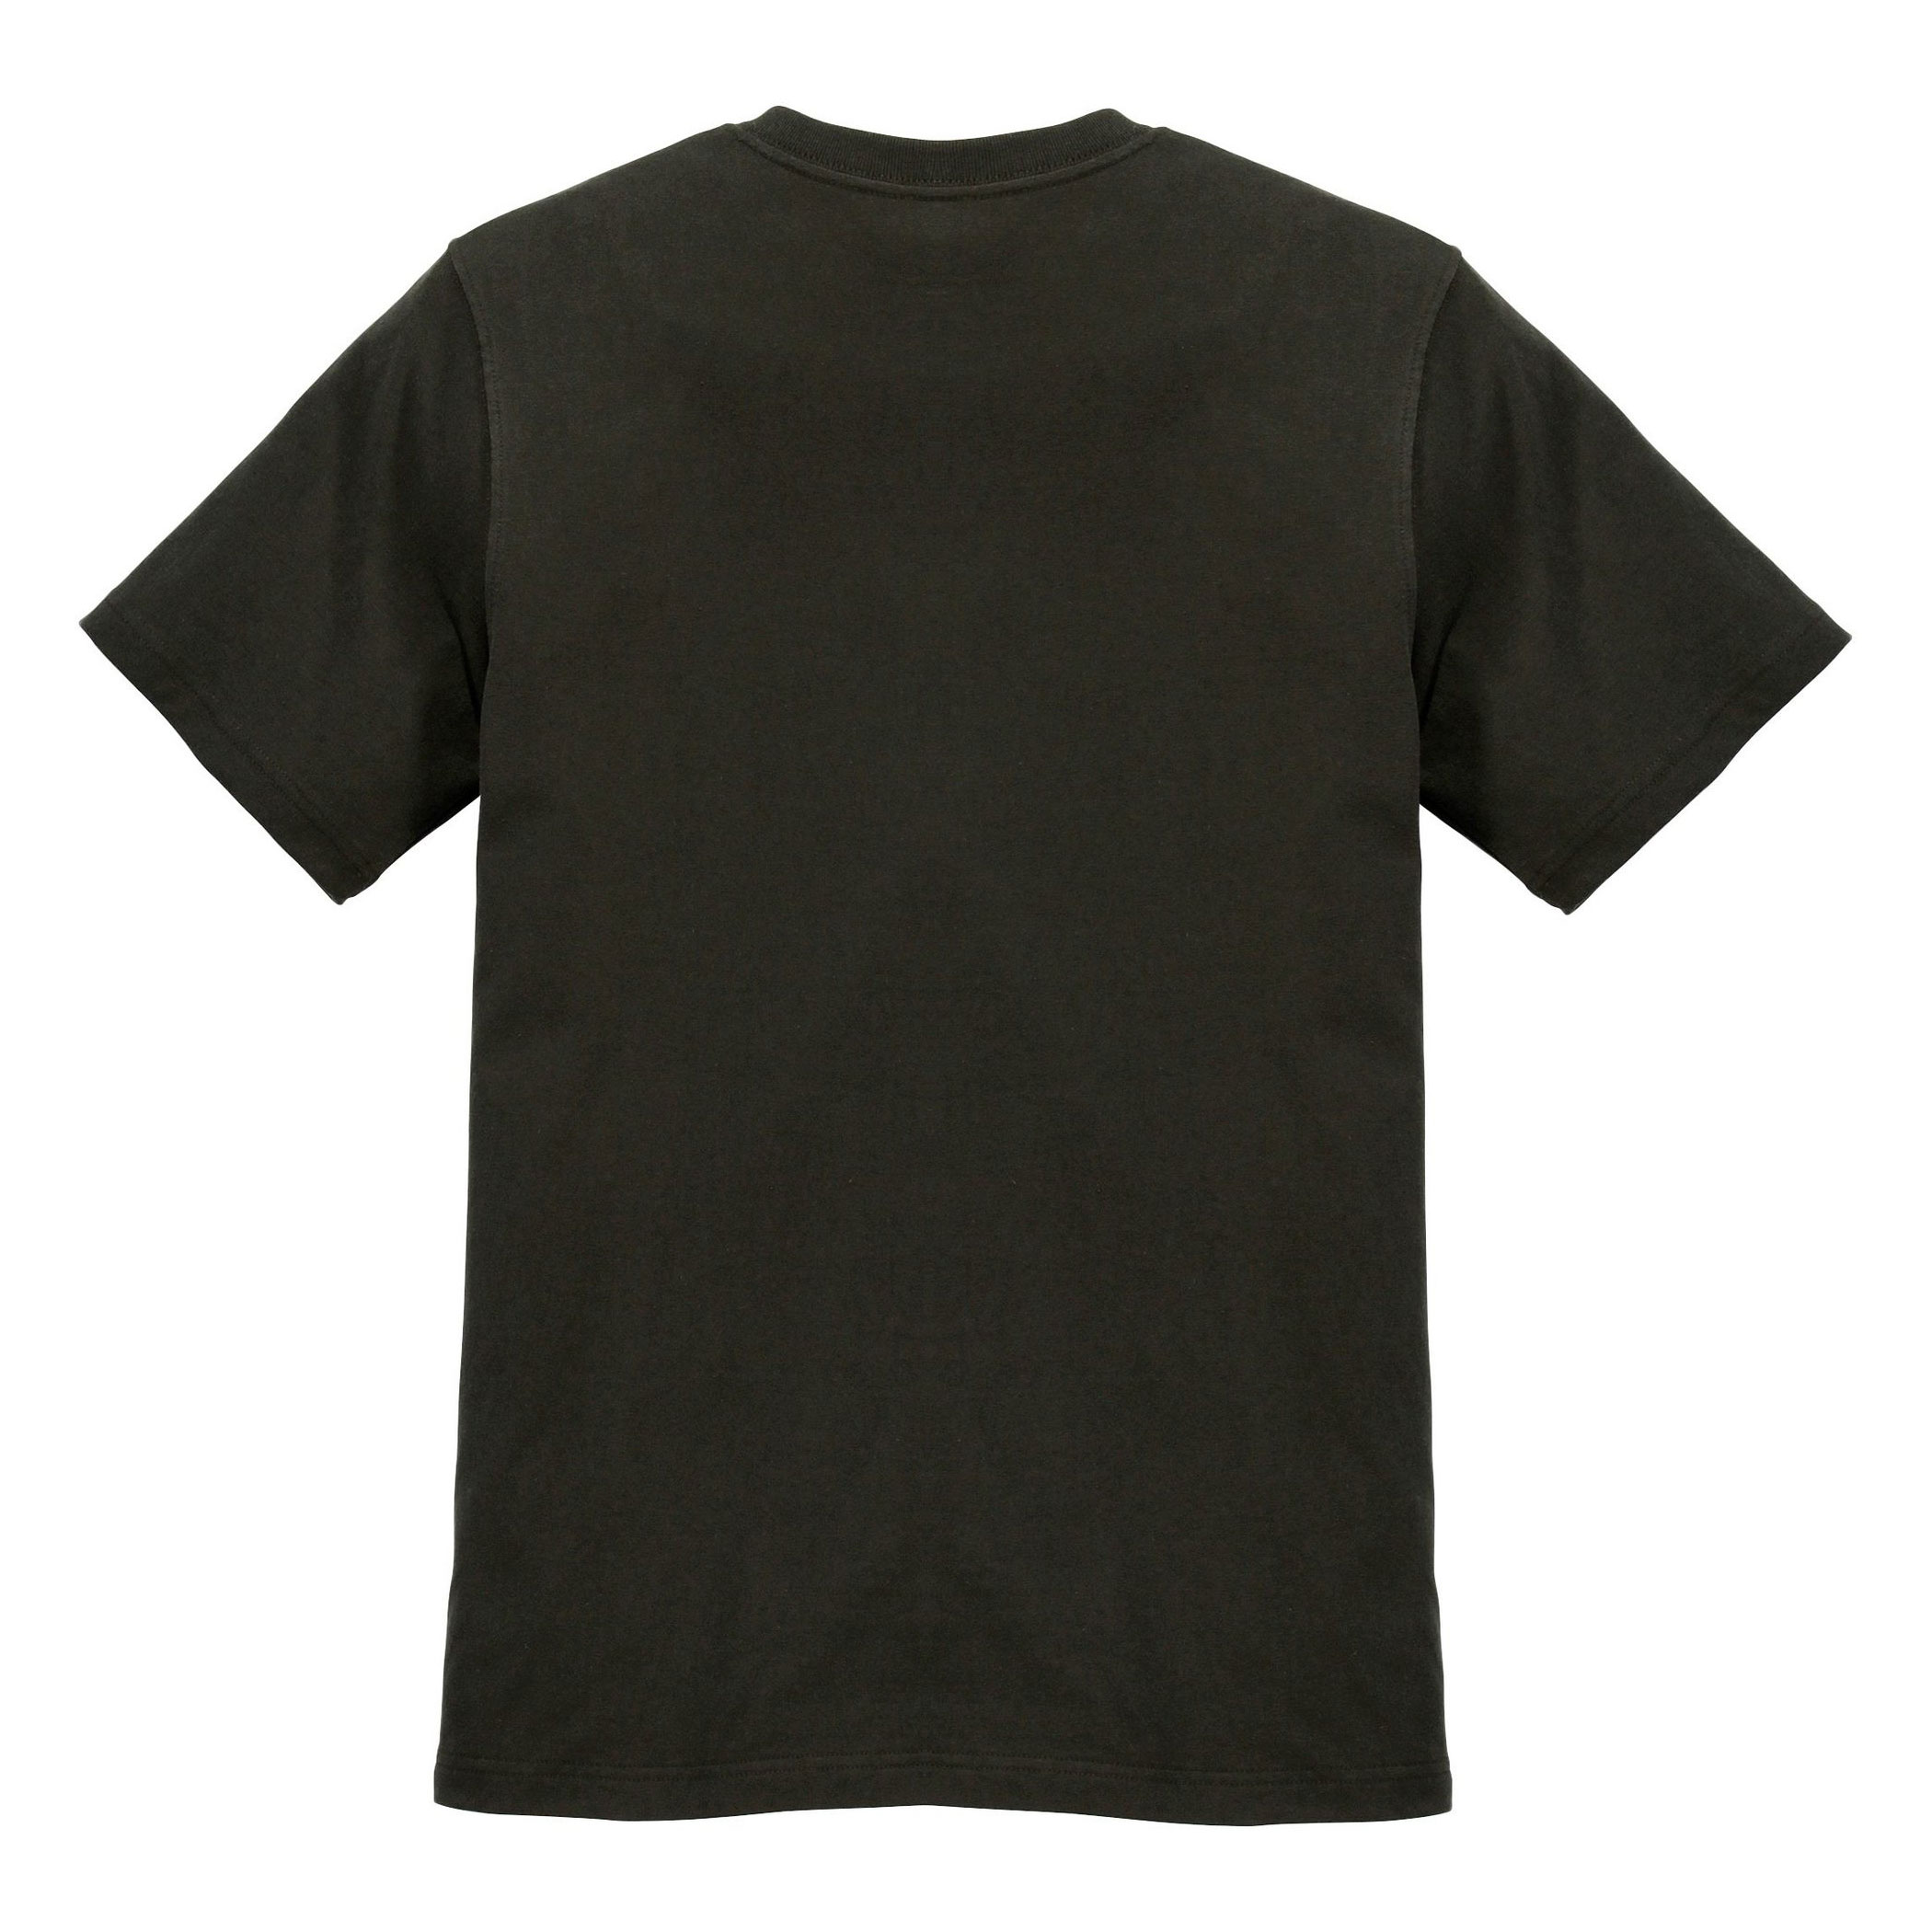 Carhartt Maddock Short Sleeve Core Logo T-Shirt peat S